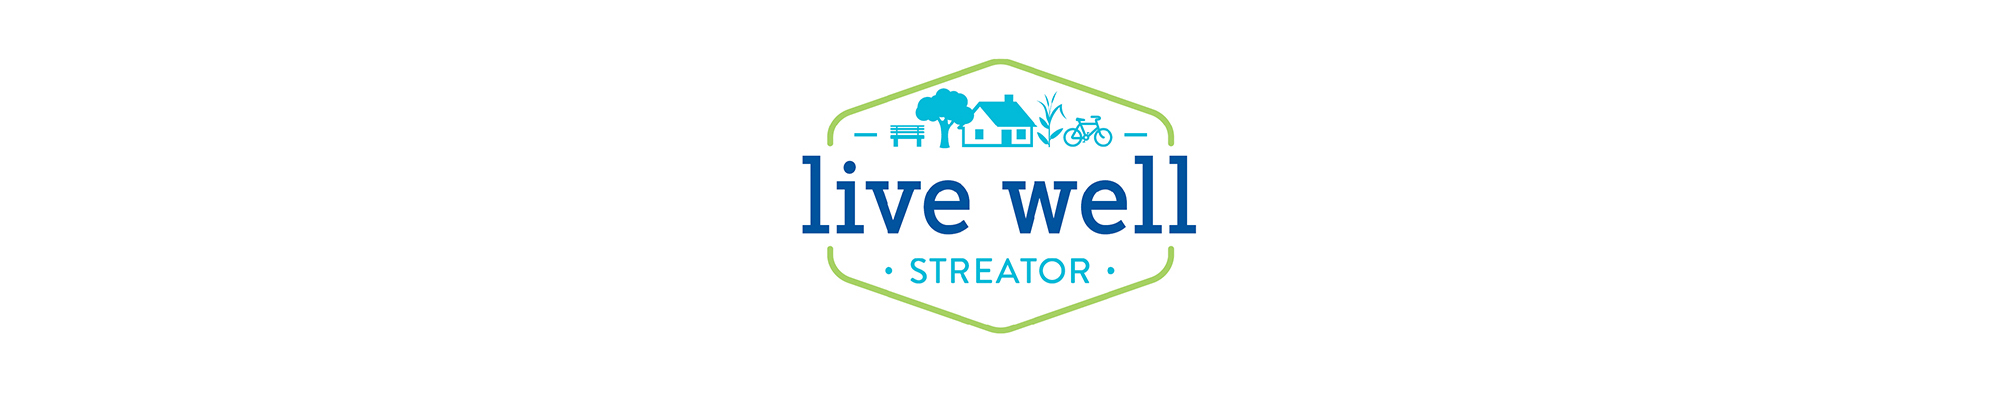 Live Well Streator logo